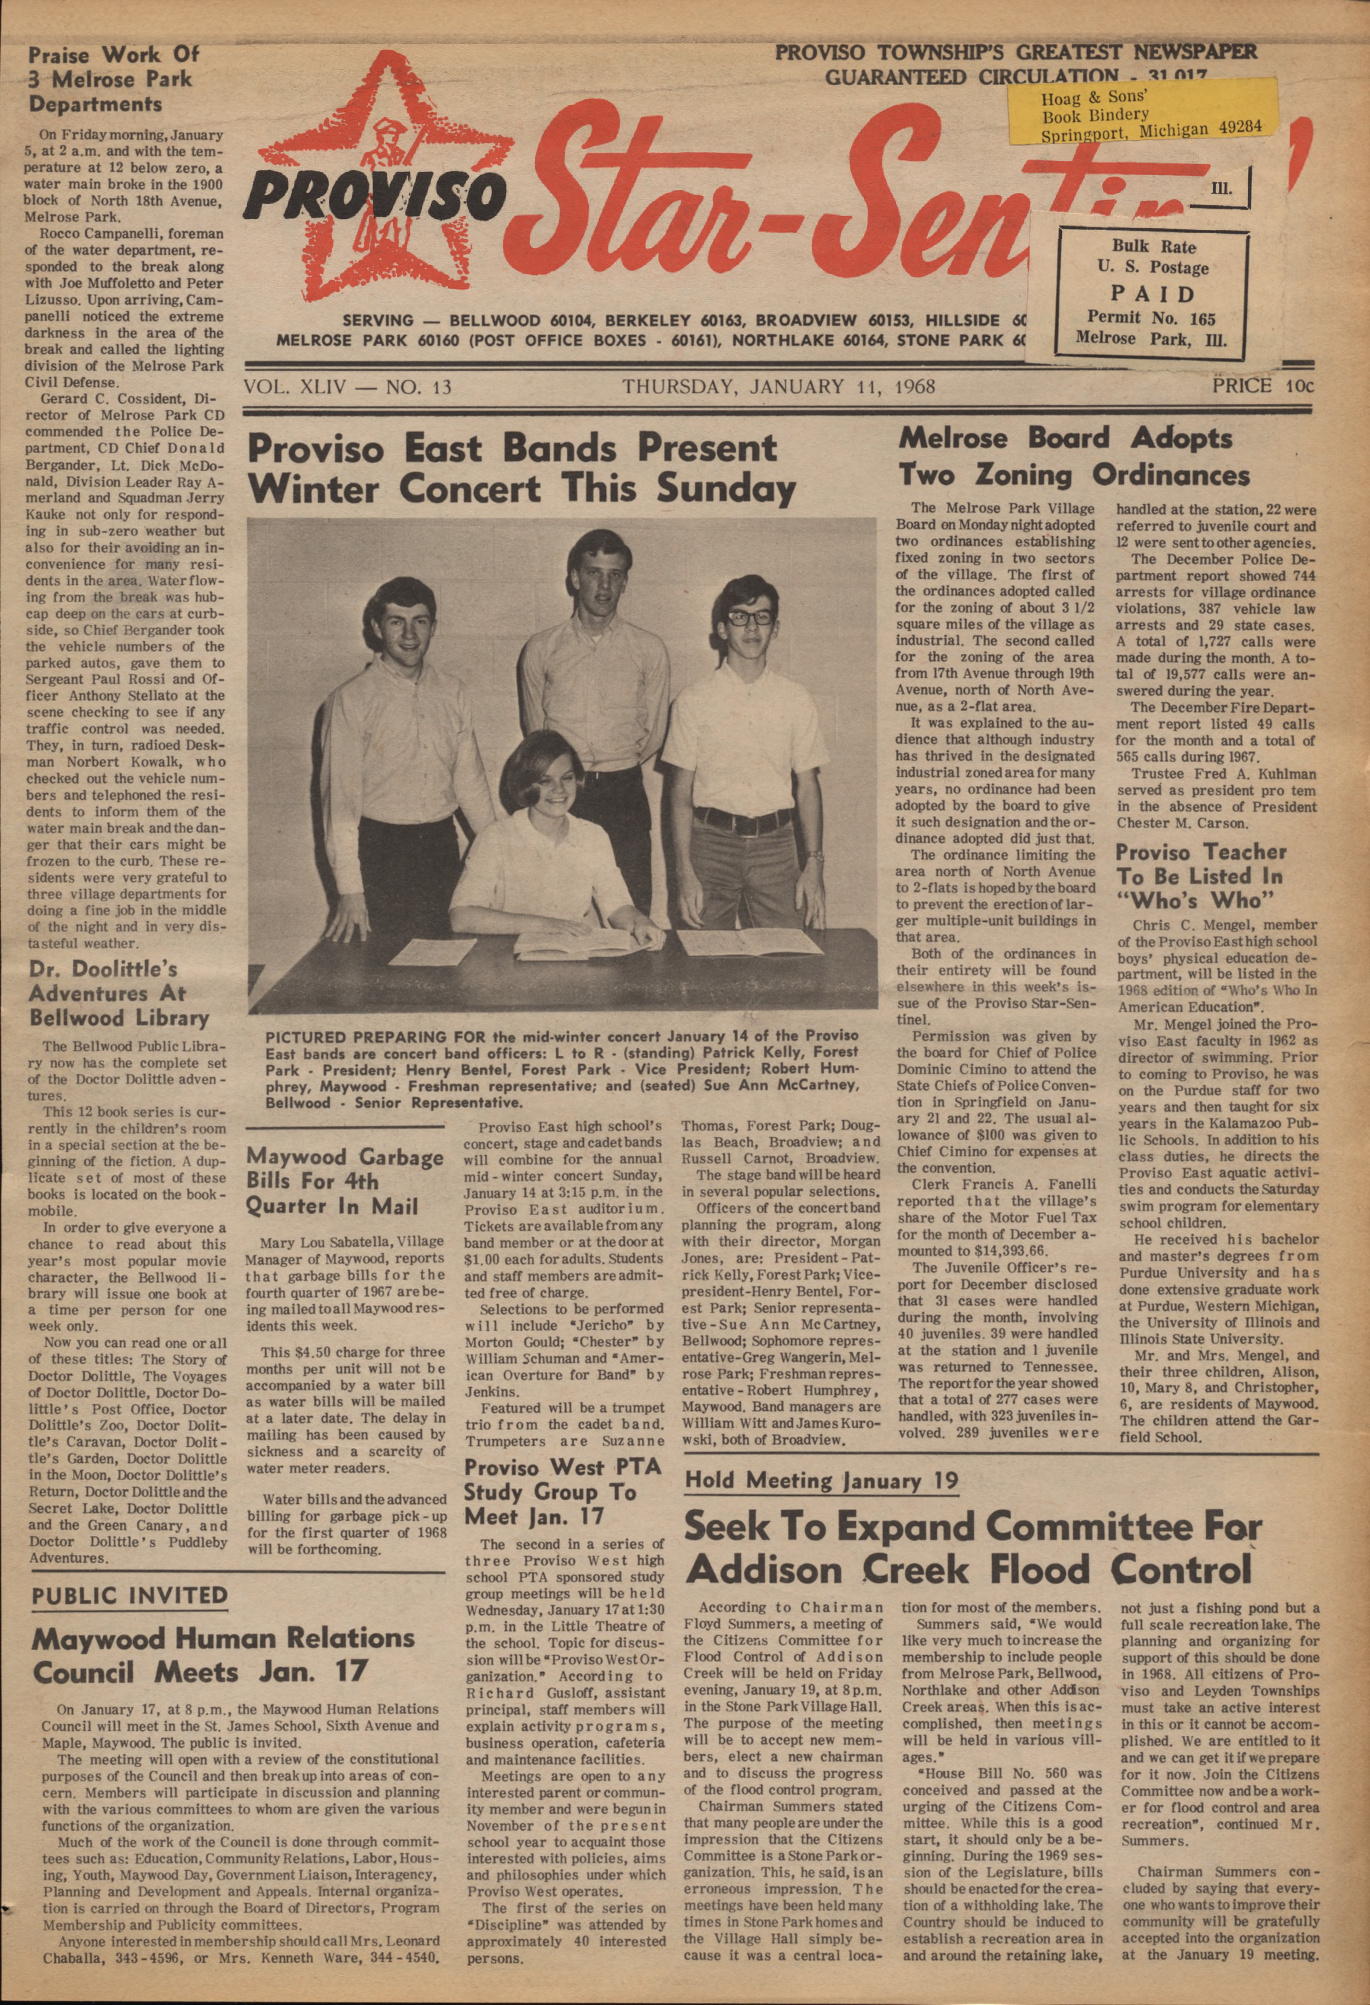 Proviso Star-Sentinel – 19680111